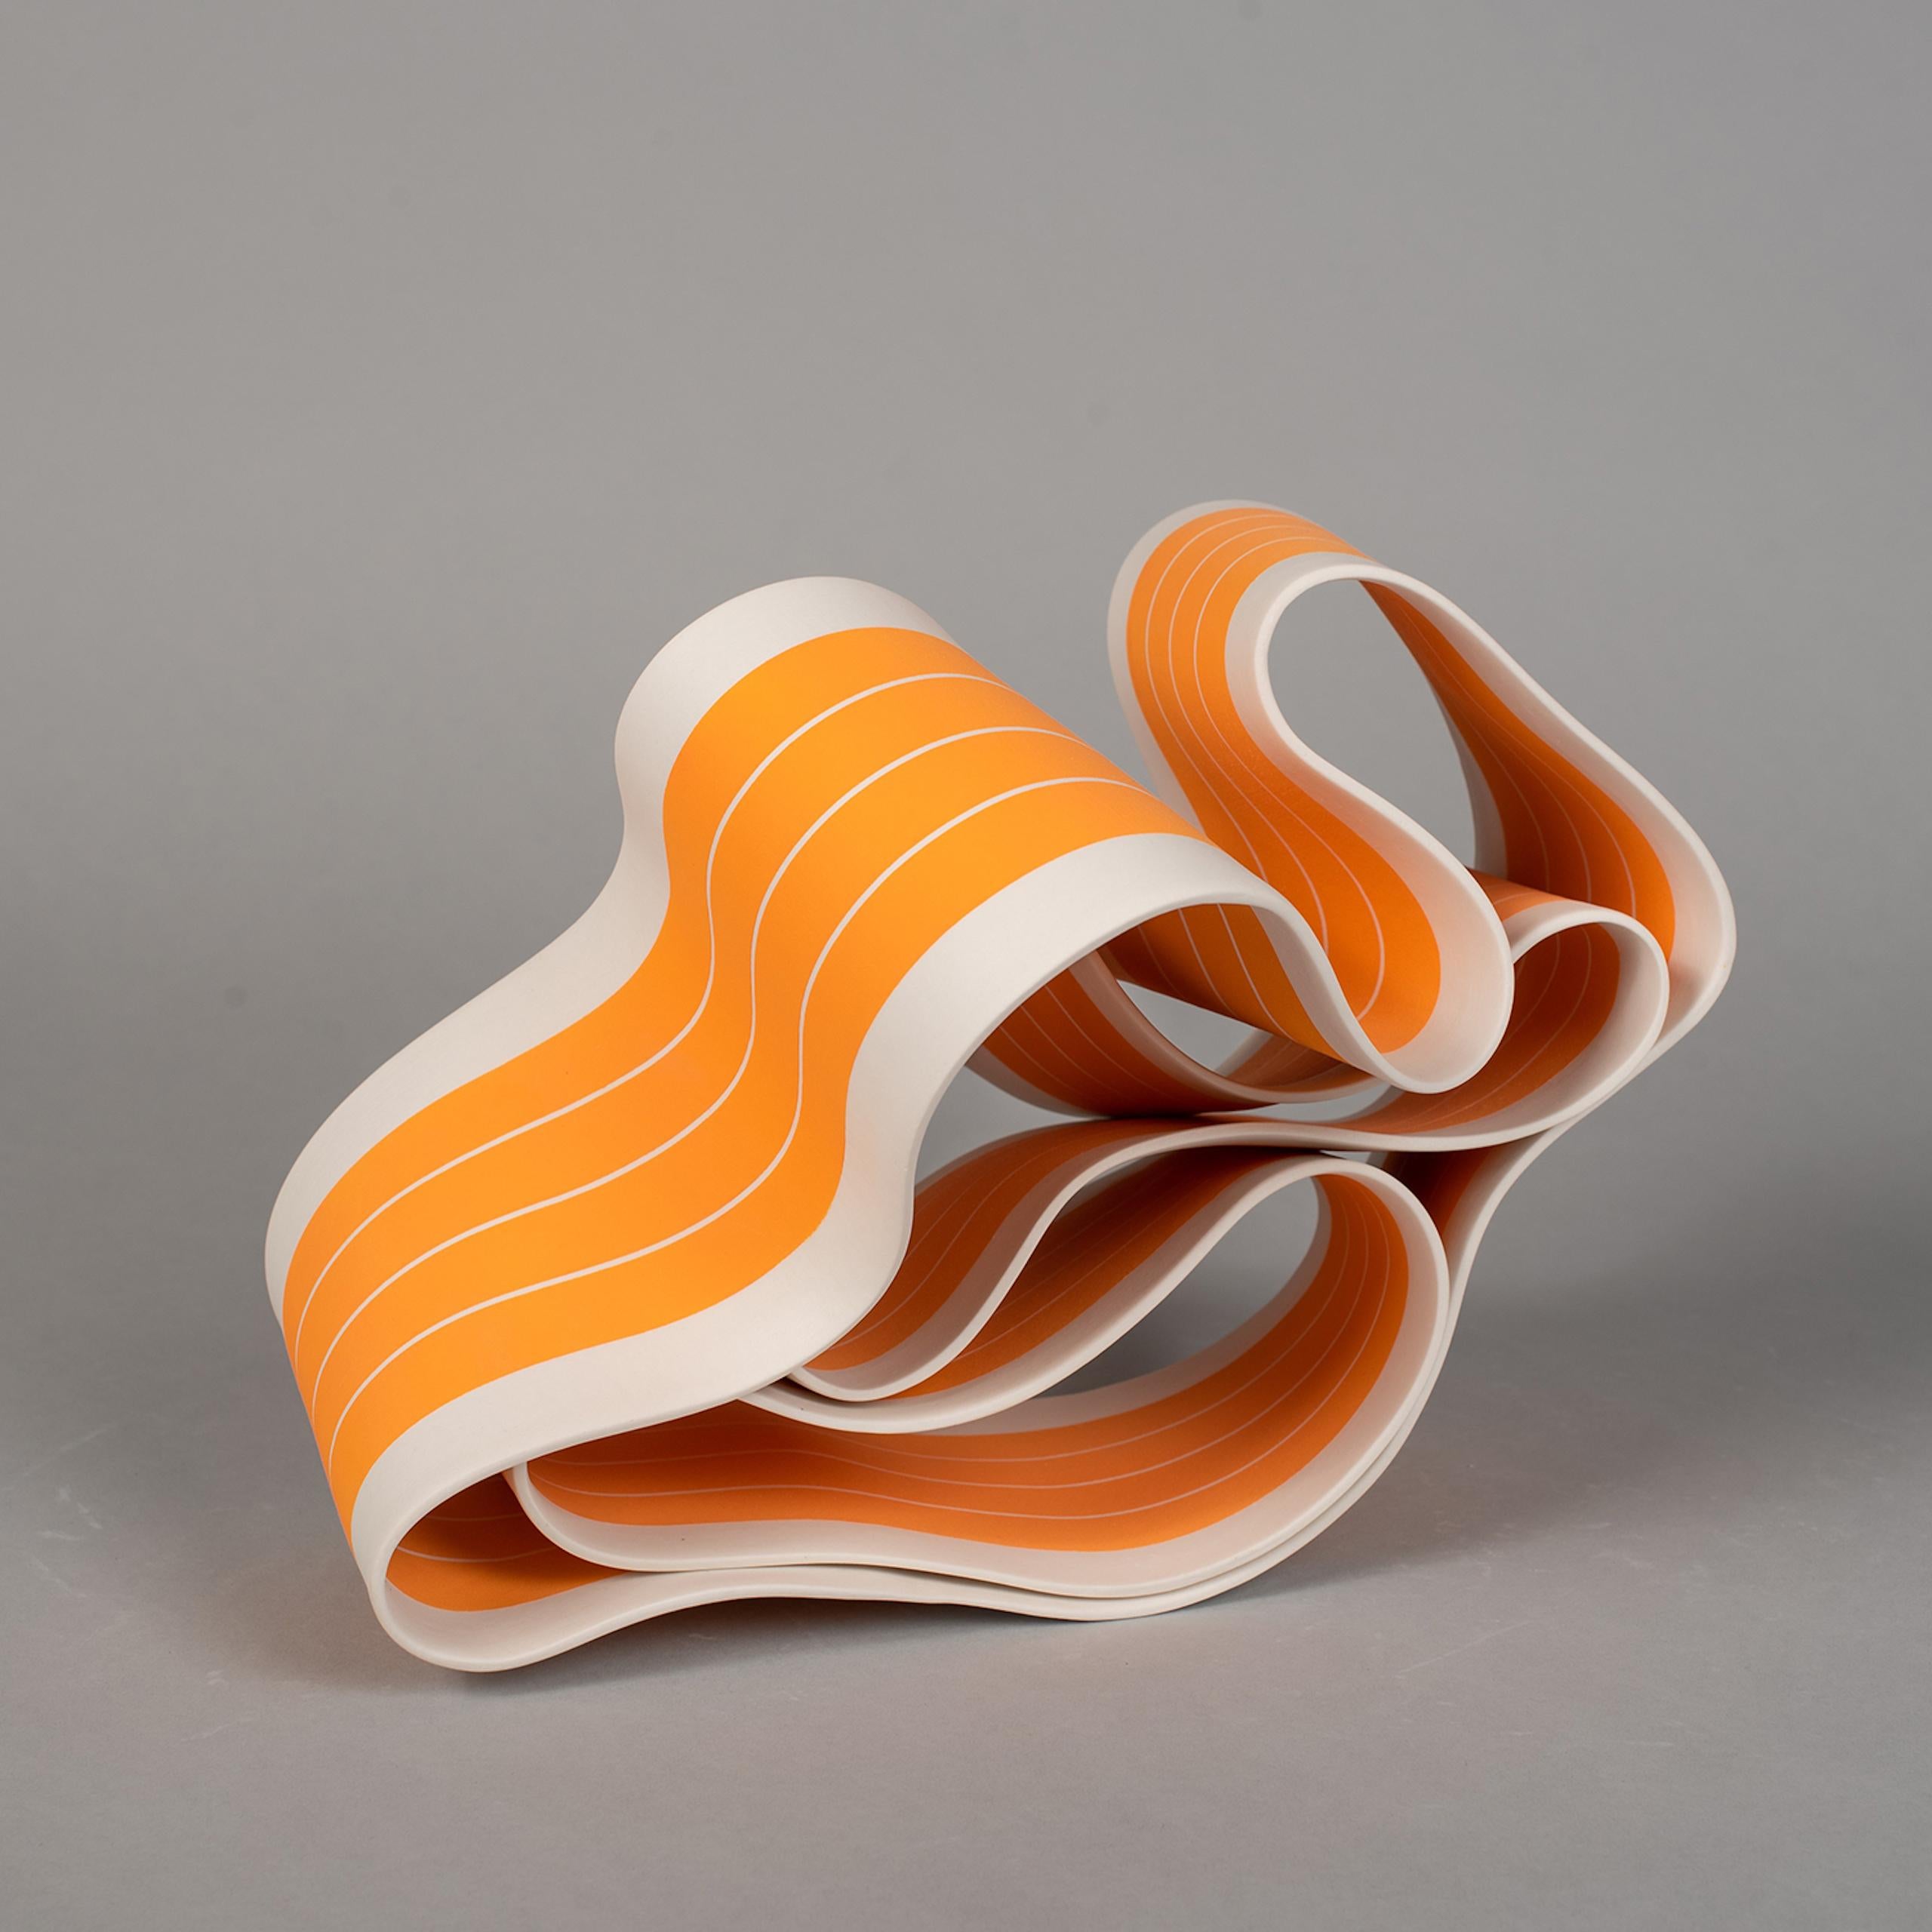 Folding in Motion 5 by Simcha Even-Chen - Porcelain sculpture, orange, line For Sale 4